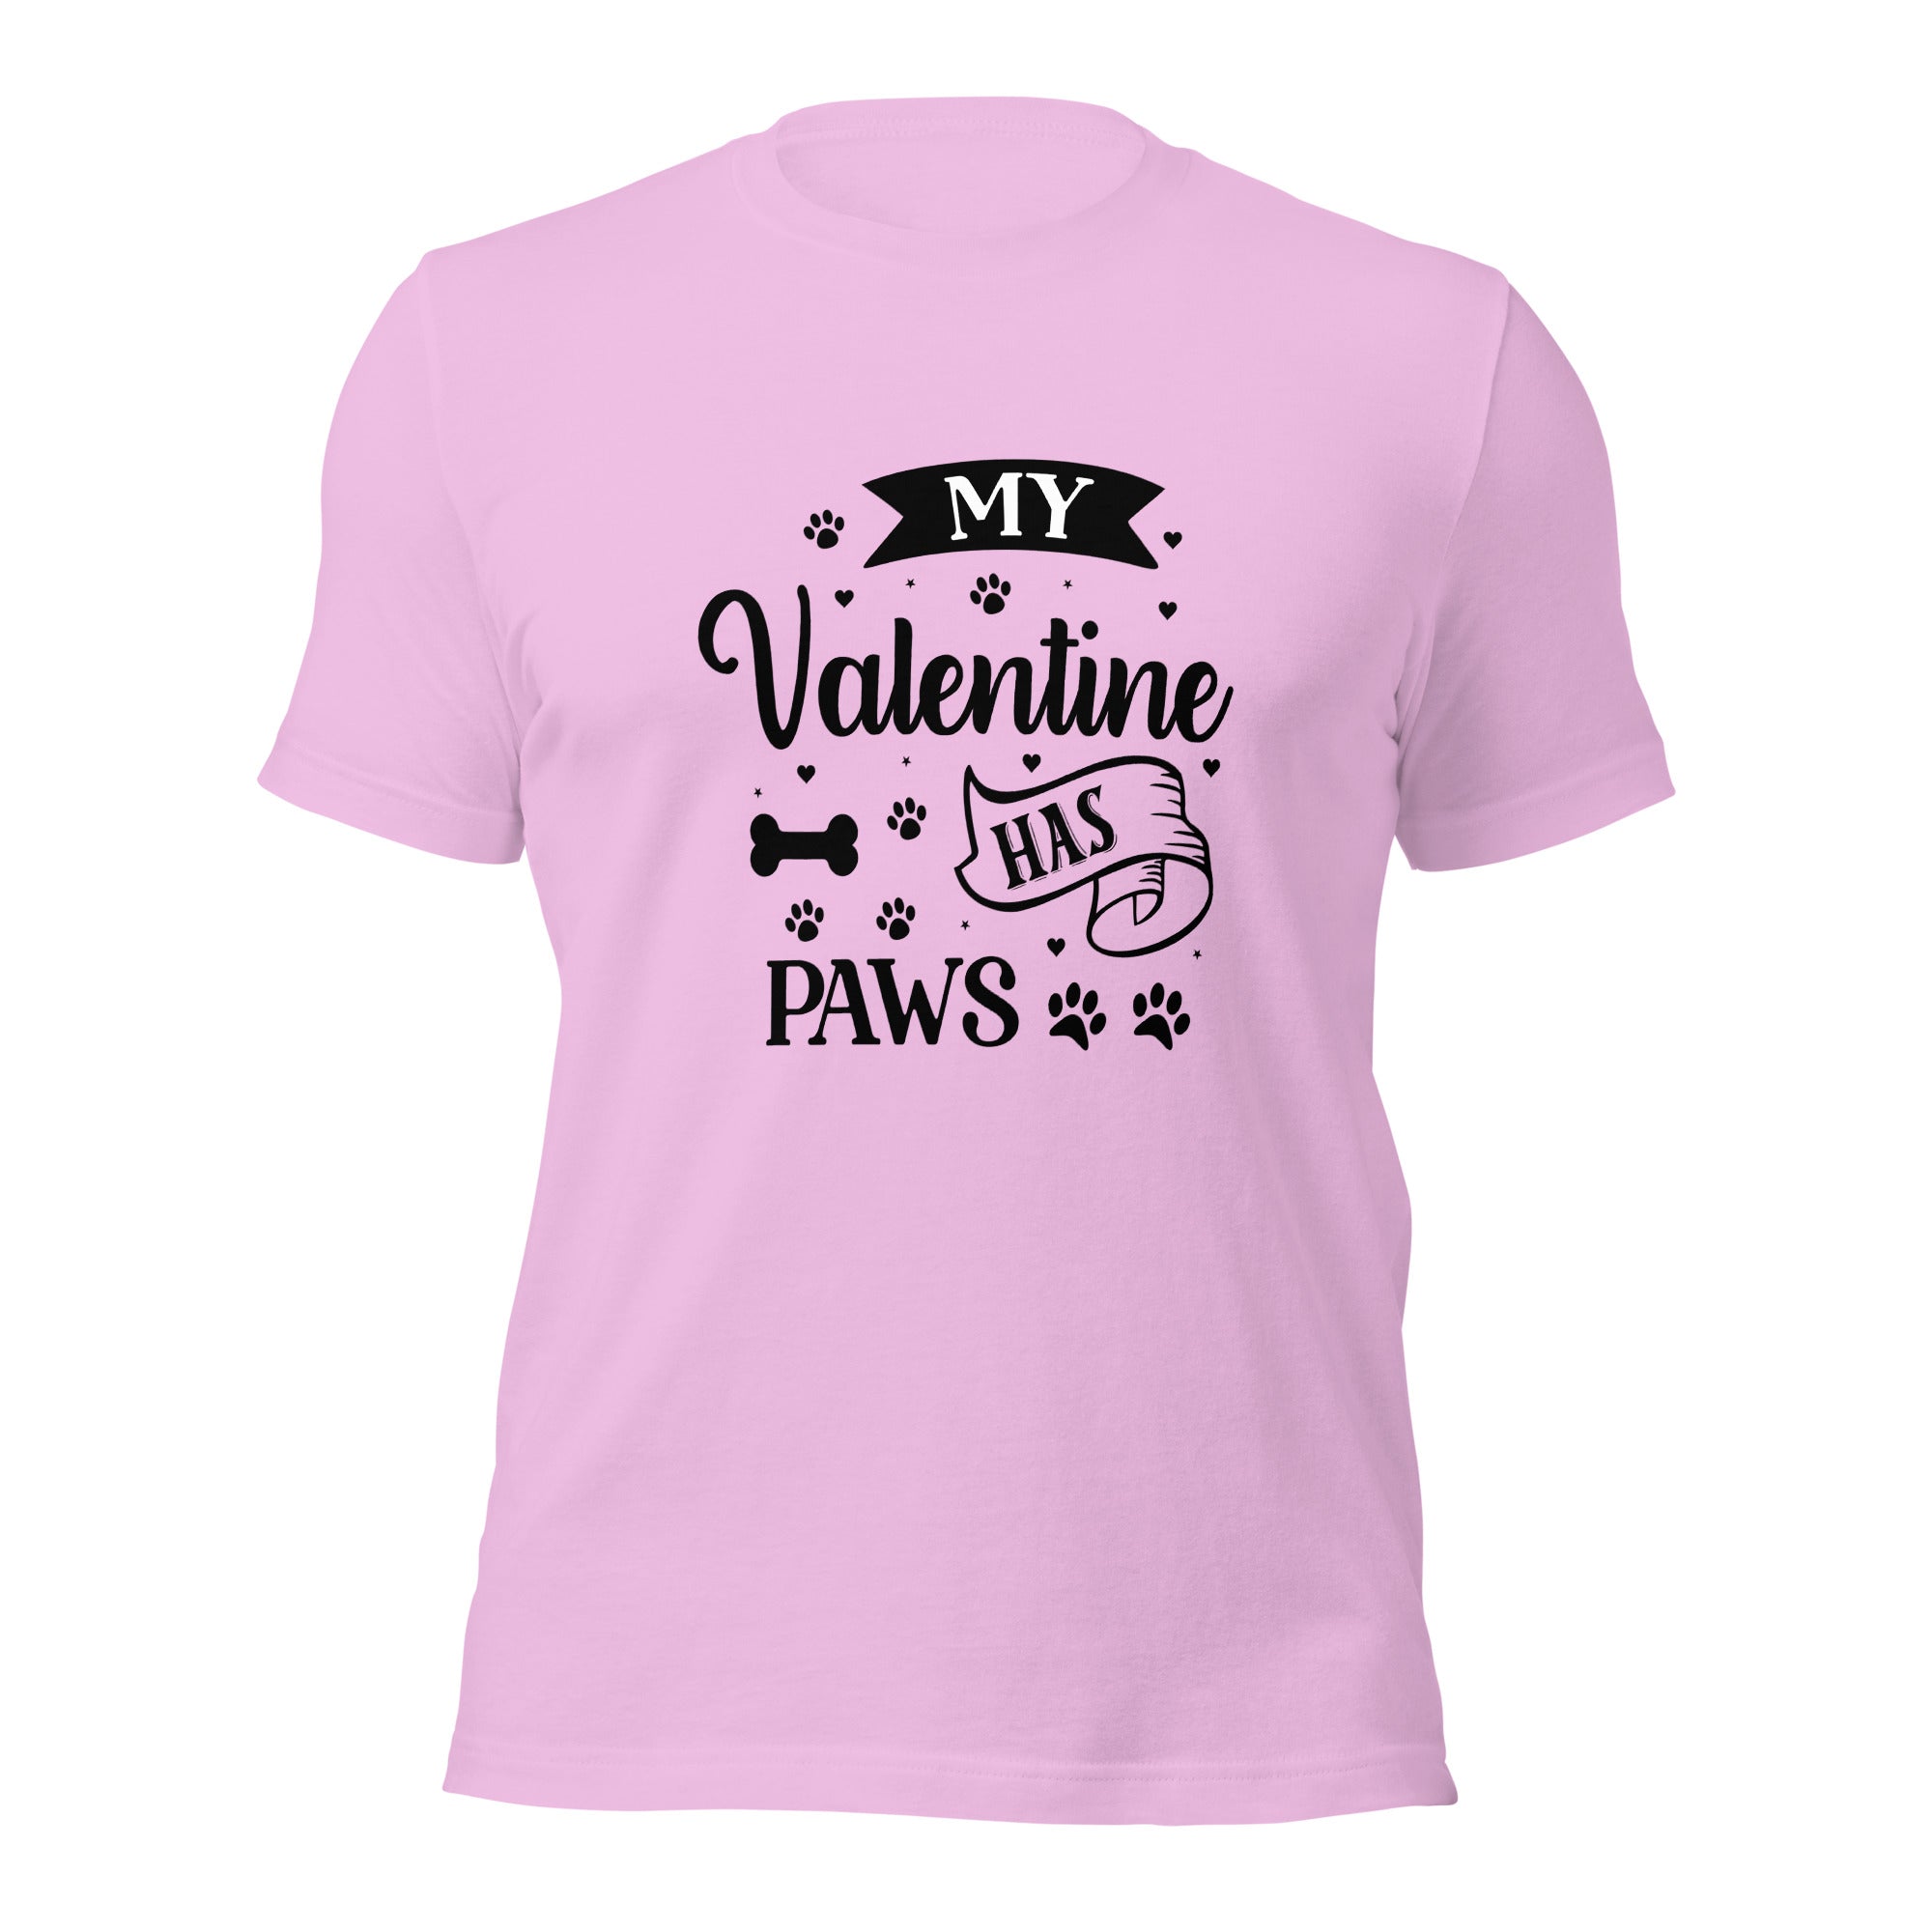 Unisex t-shirt- My Valentine has Paws